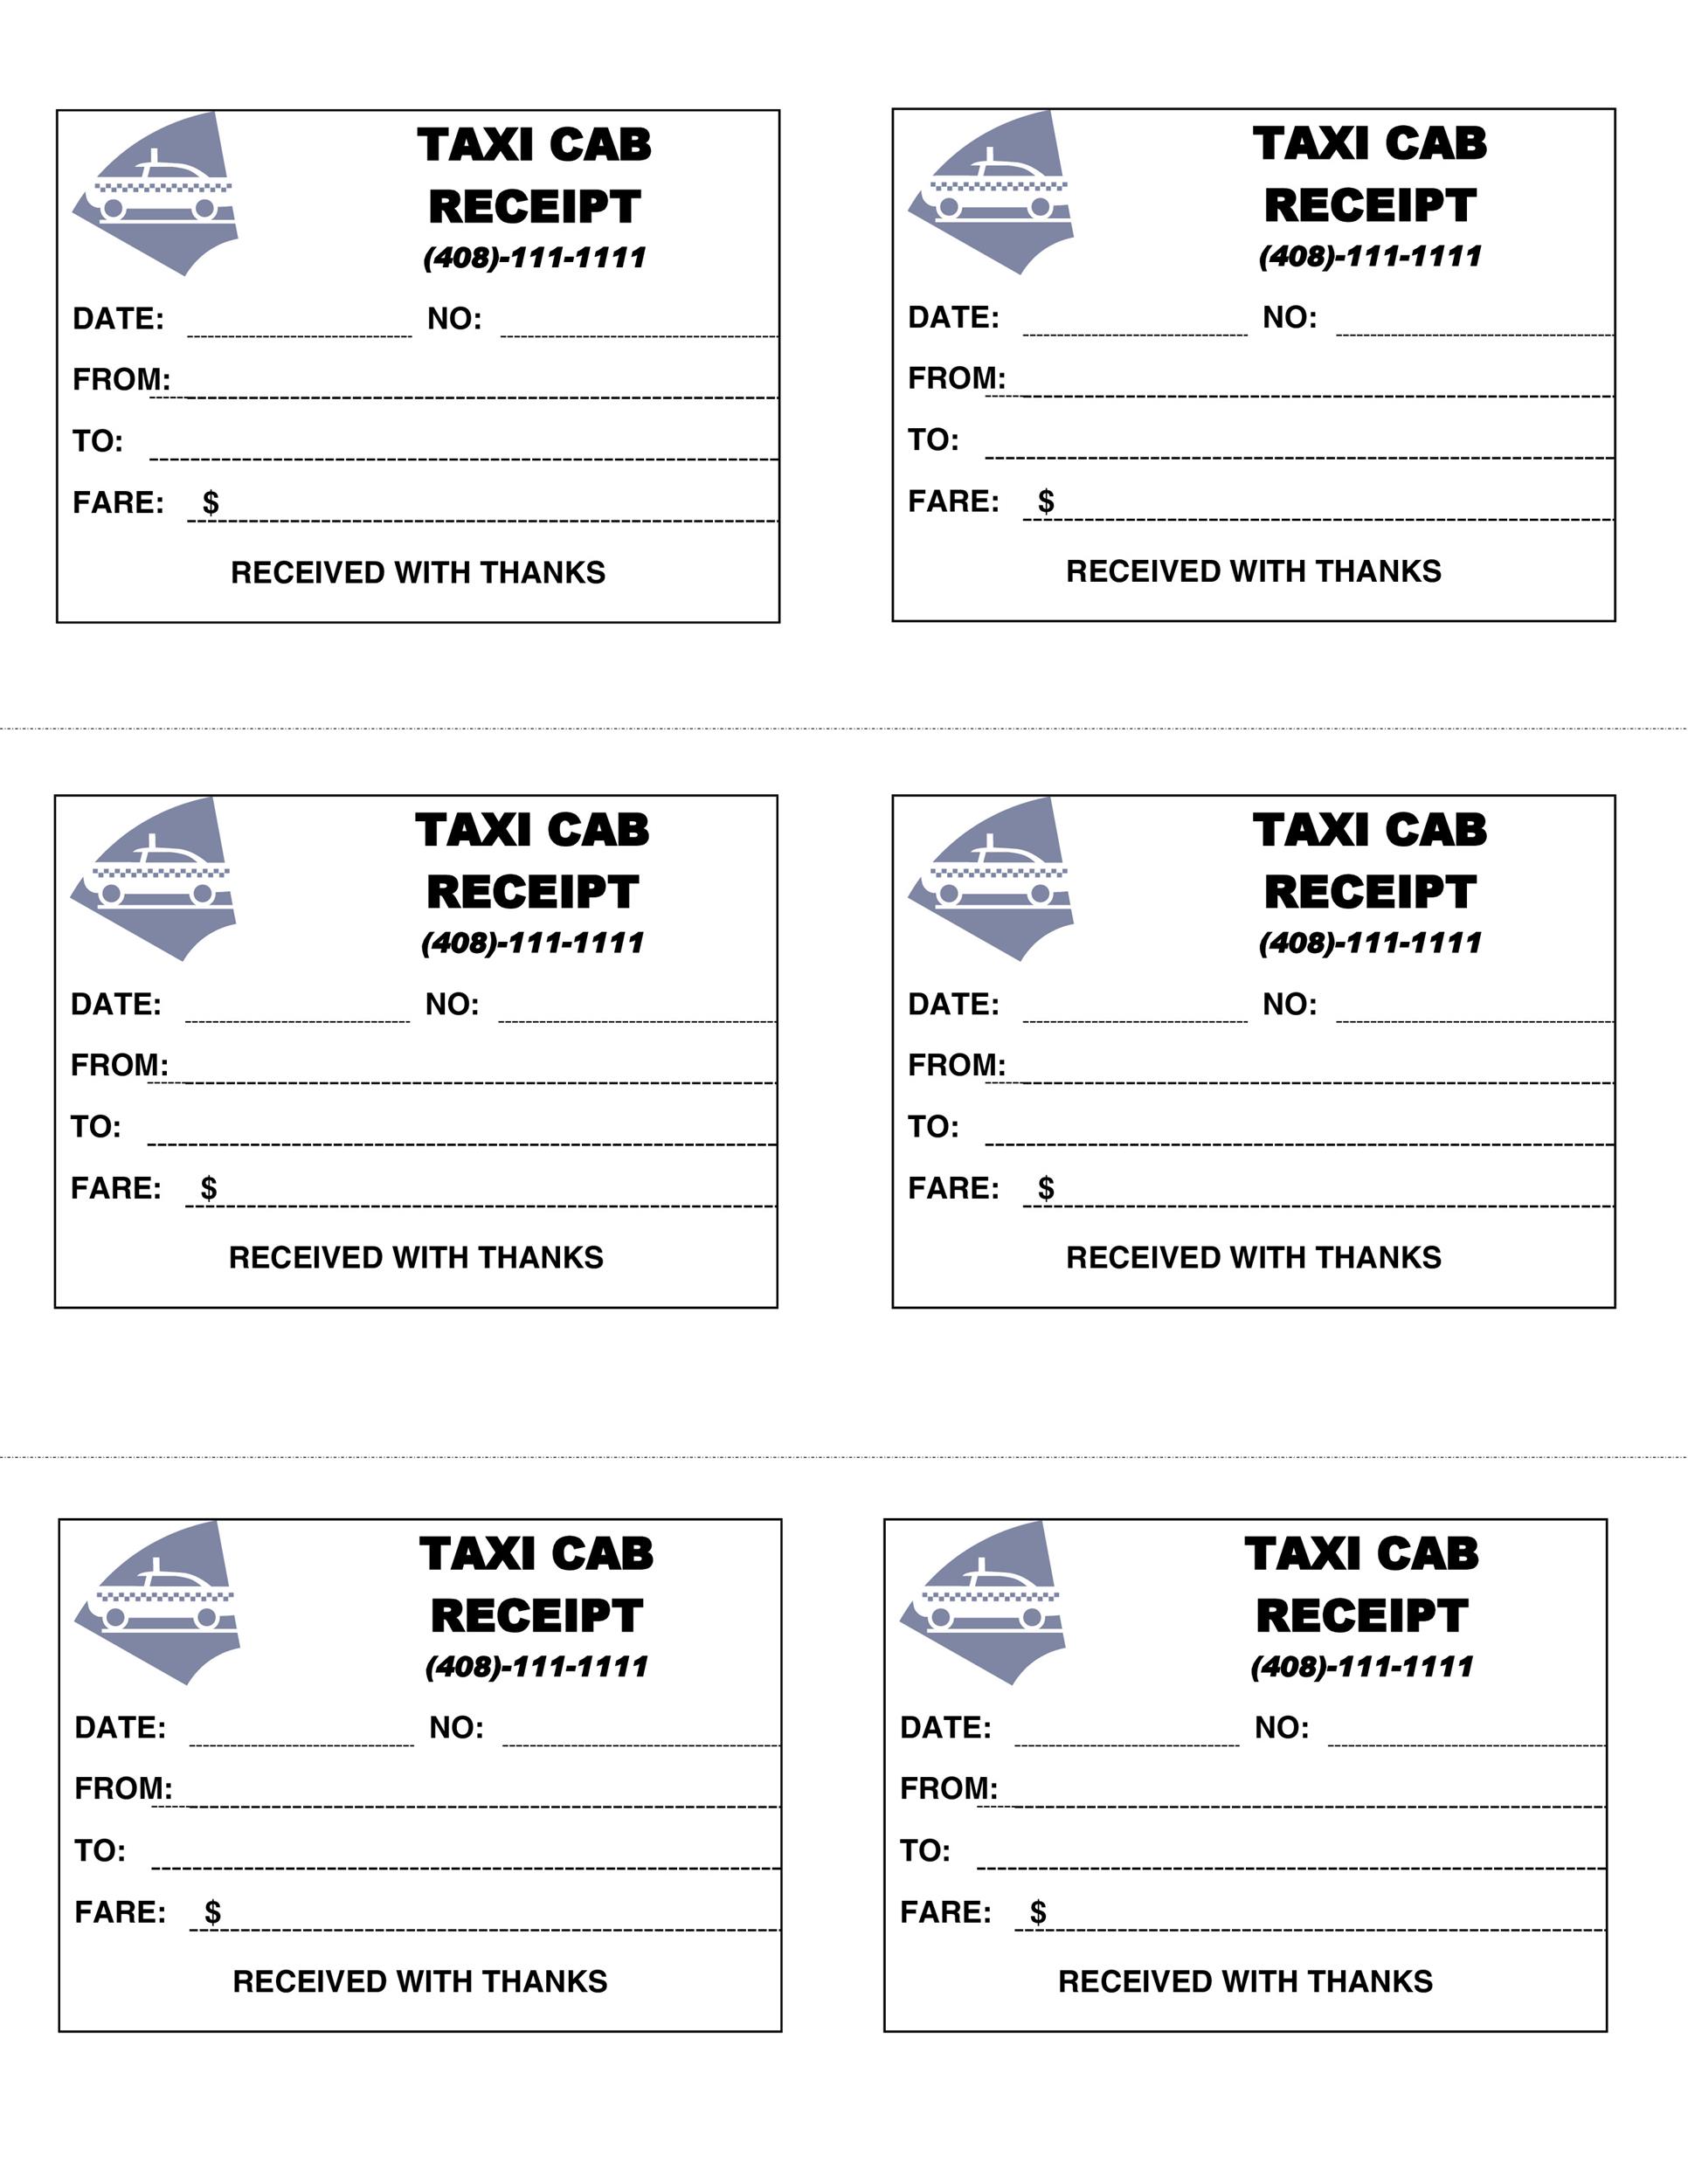 50 Free Receipt Templates Cash Sales Donation Taxi 